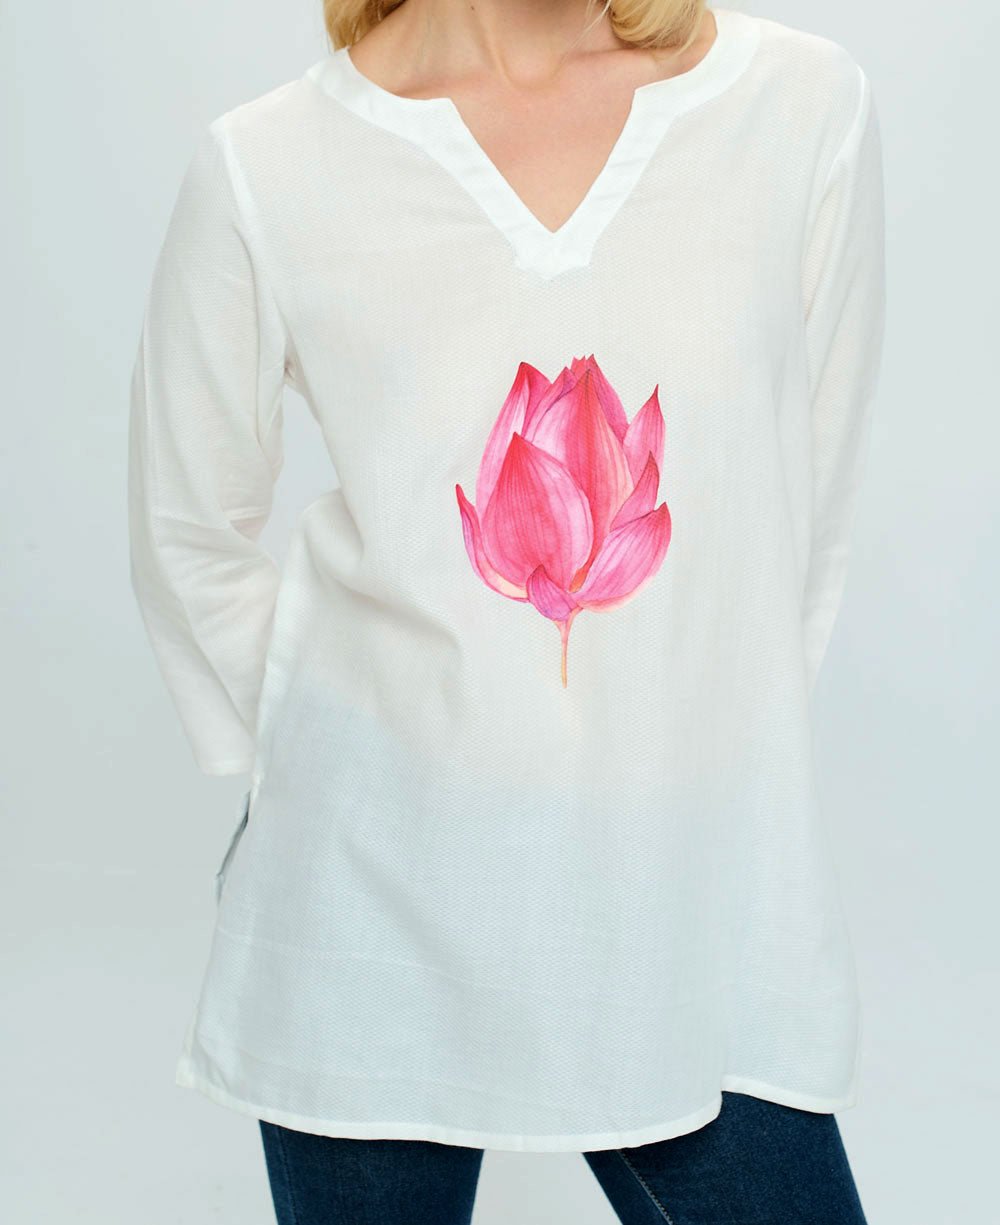 Lotus Design White Woven Cotton Tunic Top - Shirts & Tops S